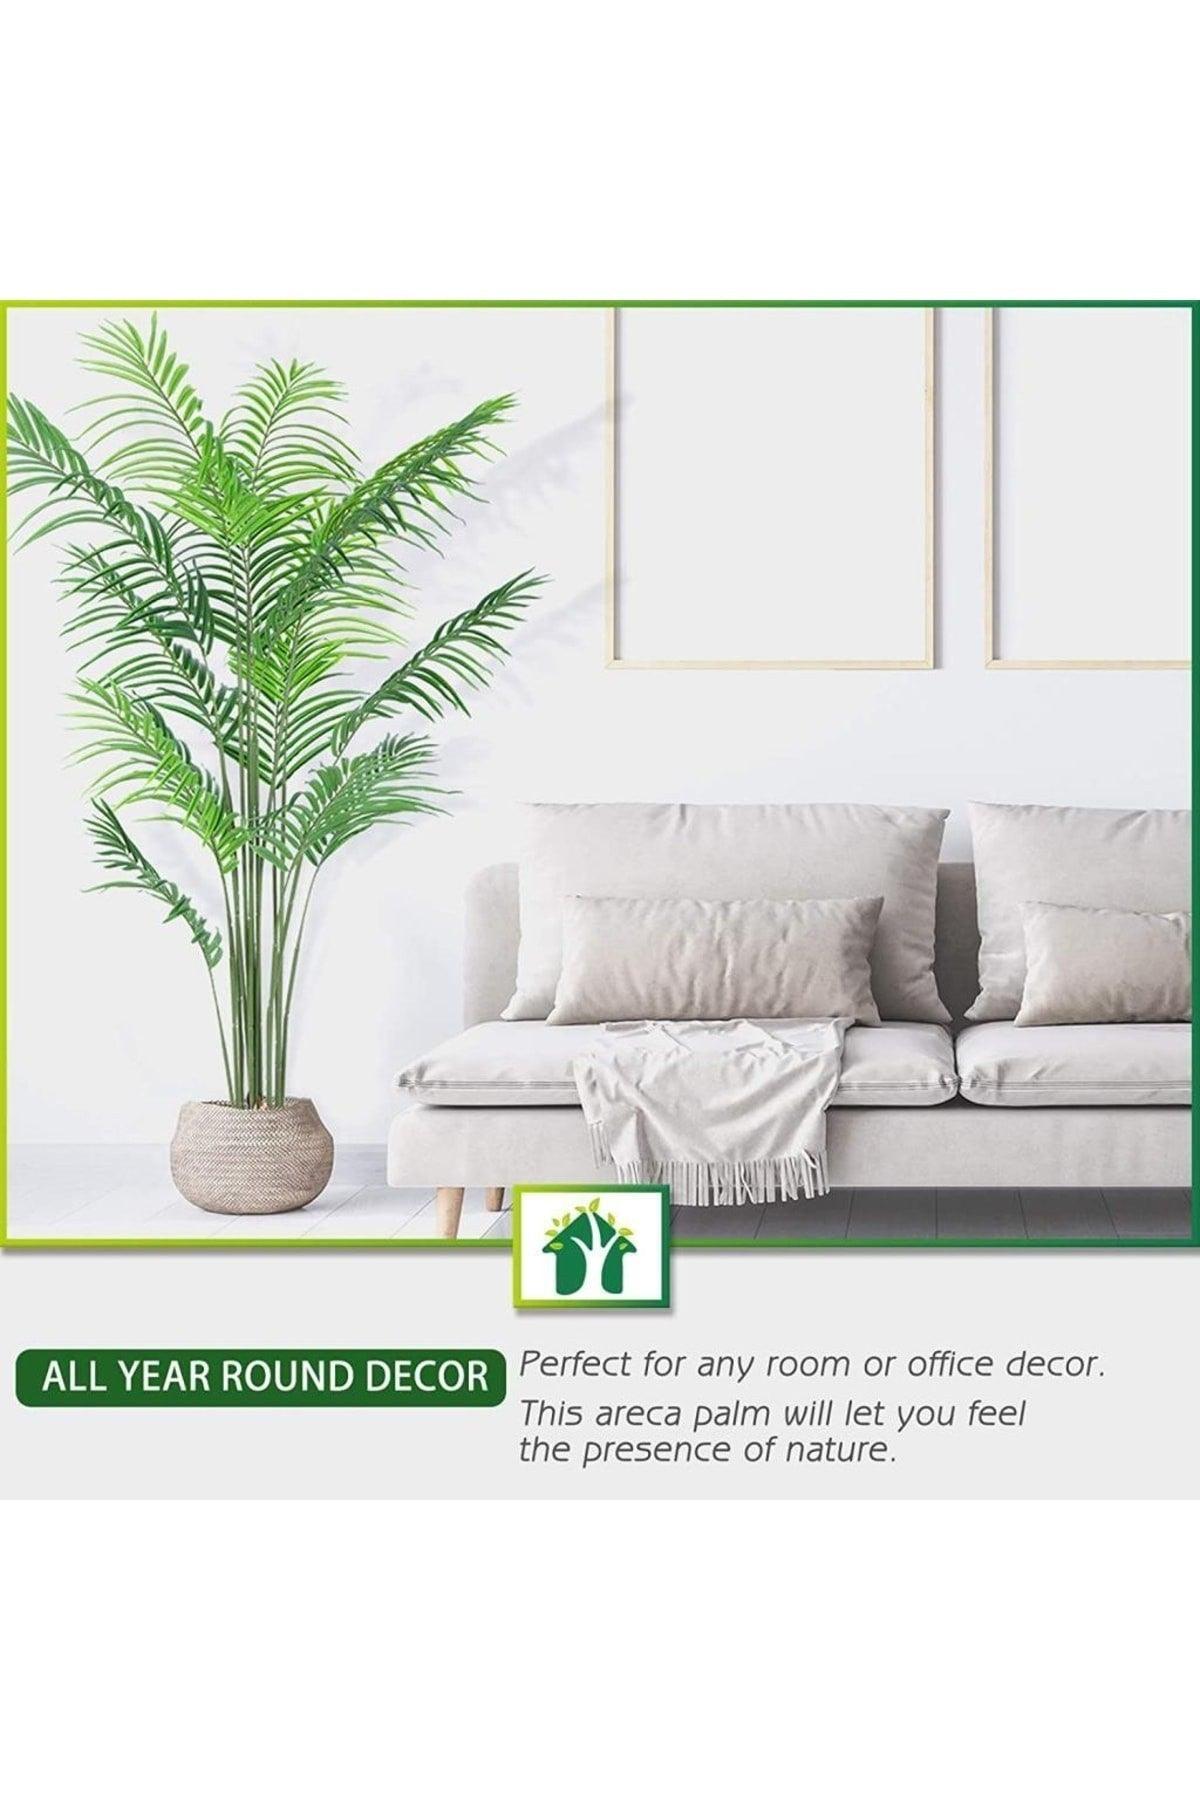 Artificial Tree Areca Tree Palm Tree Living Room Plant 160cm12 leaves - Swordslife